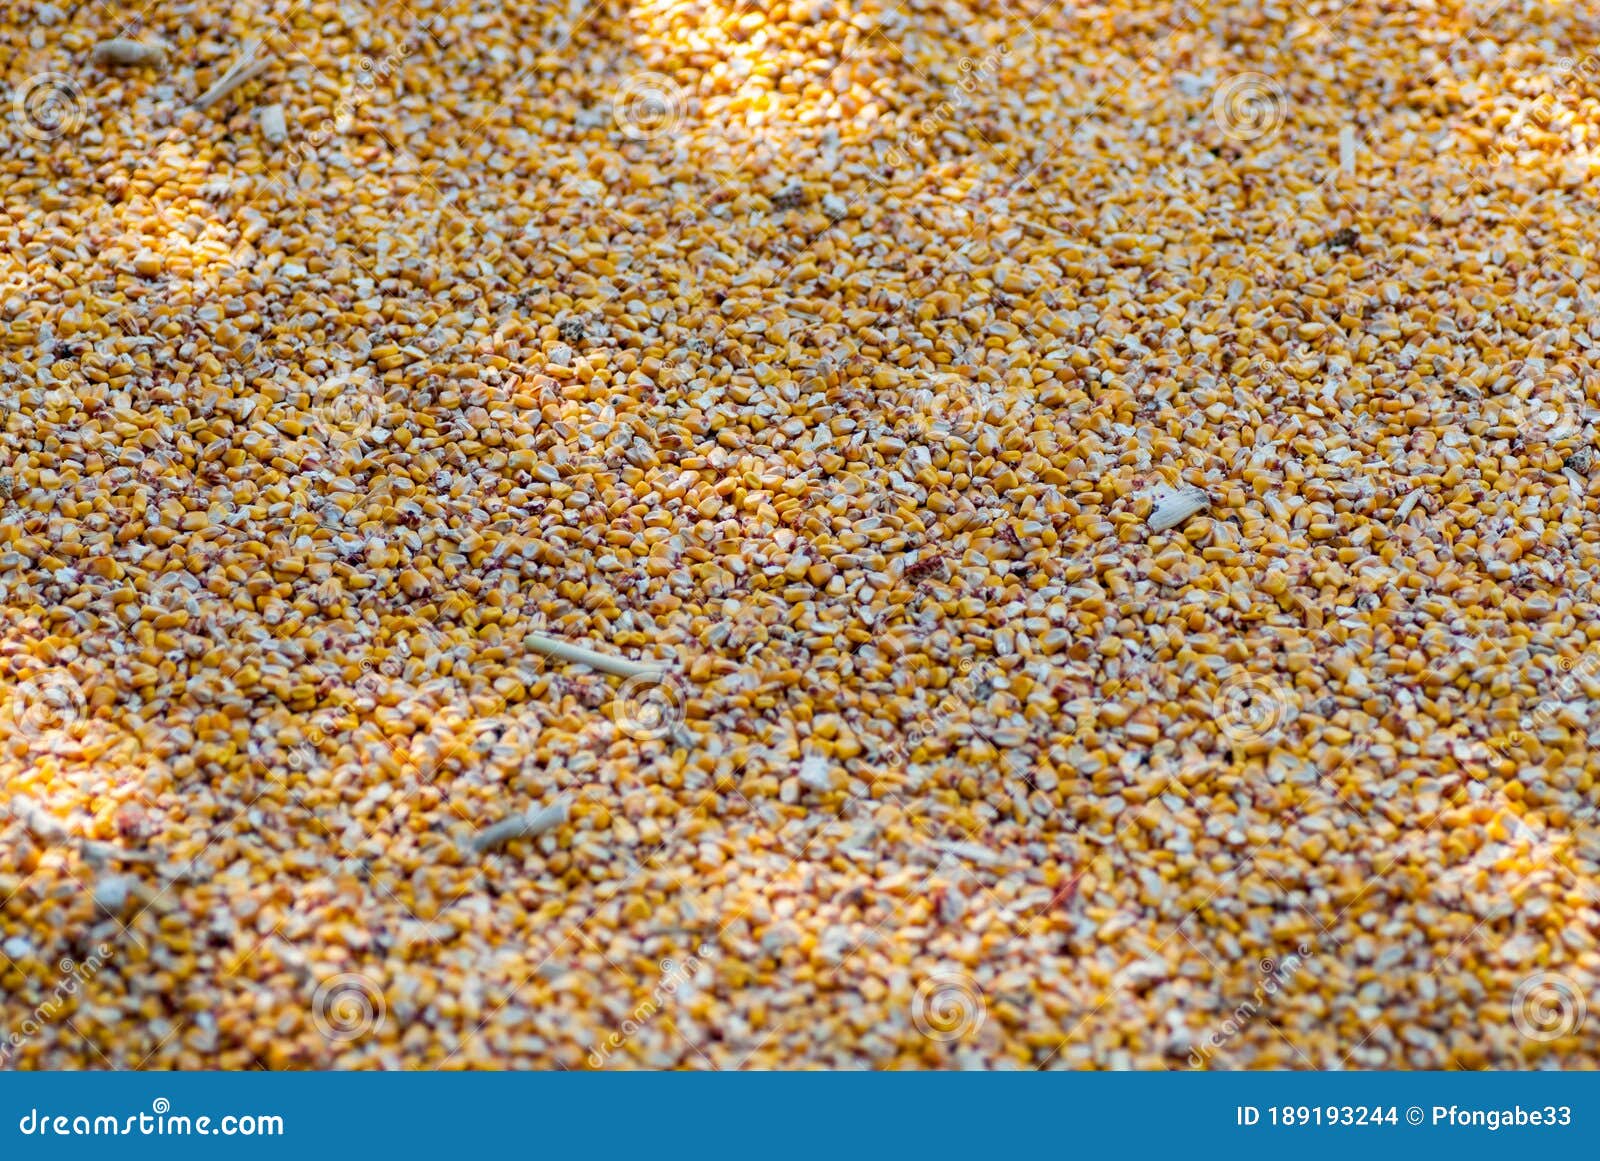 corn grains heap freshly harvested